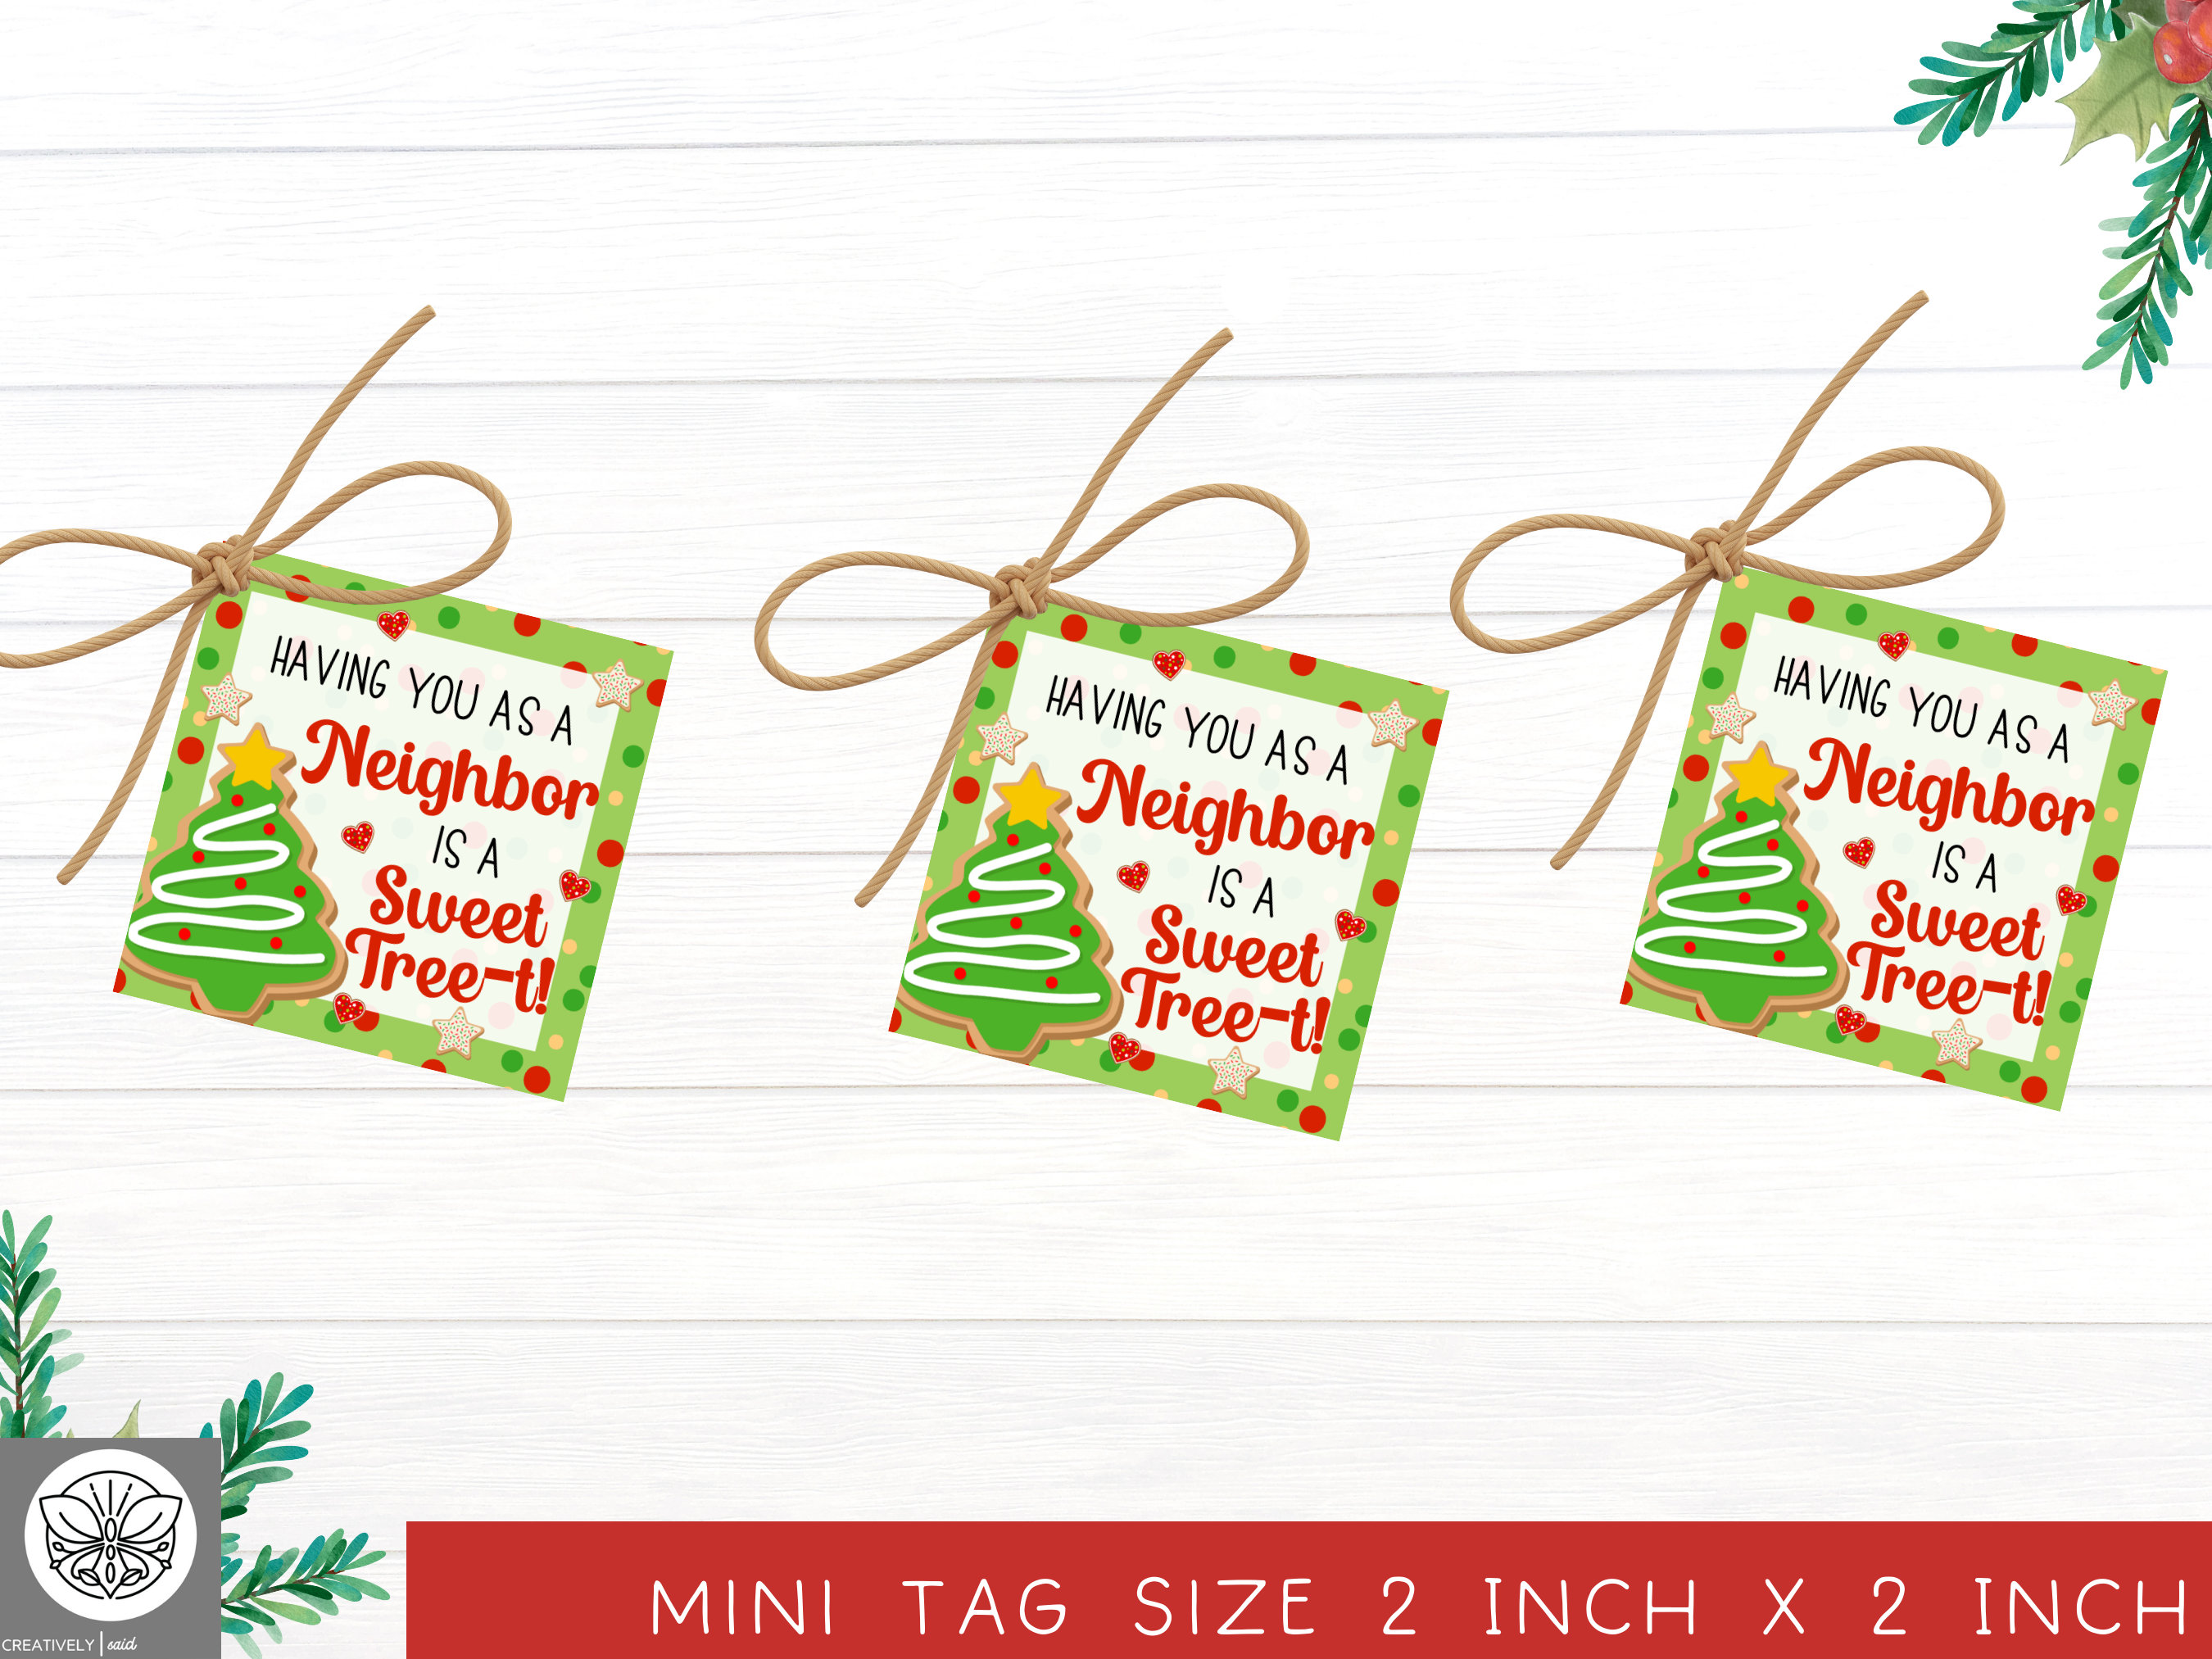 Fun and Creative Neighbor Christmas Gift Ideas with FREE Printable